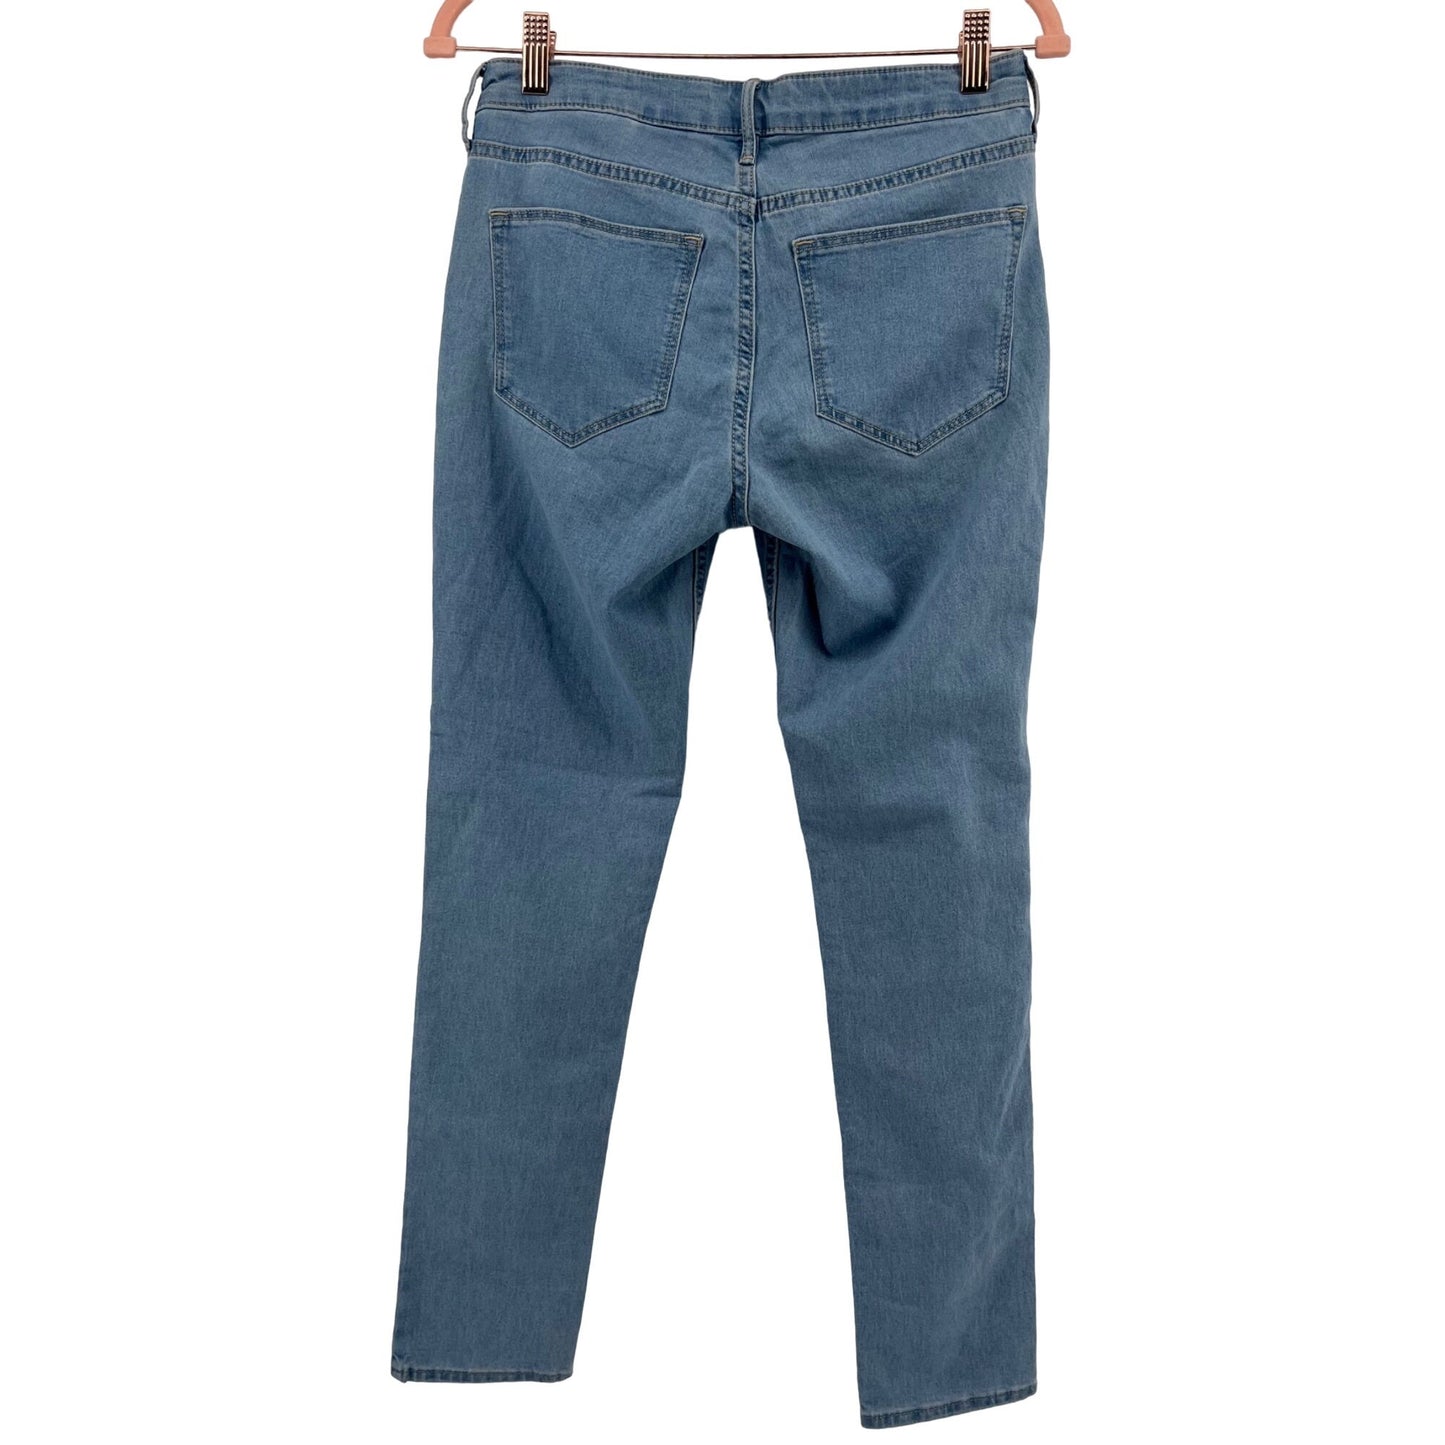 H&M Women's Size 28 Blue Jean Denim Pants